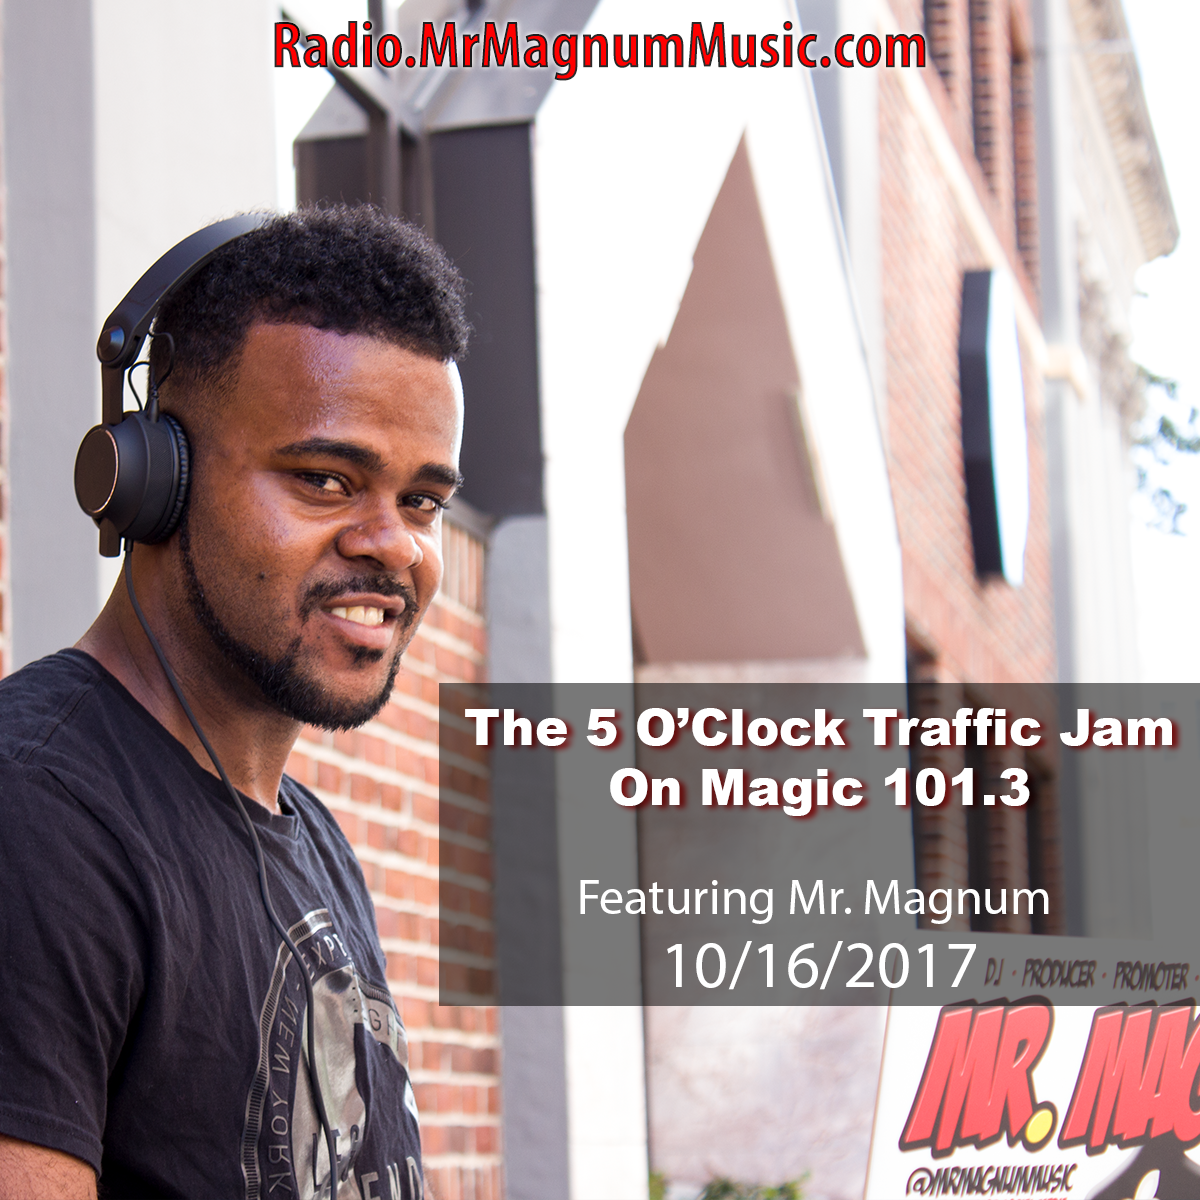 The 5 O'Clock Traffic Jam 20171016 featuring Gainesville's #1 DJ, Mr. Magnum on Magic 101.3